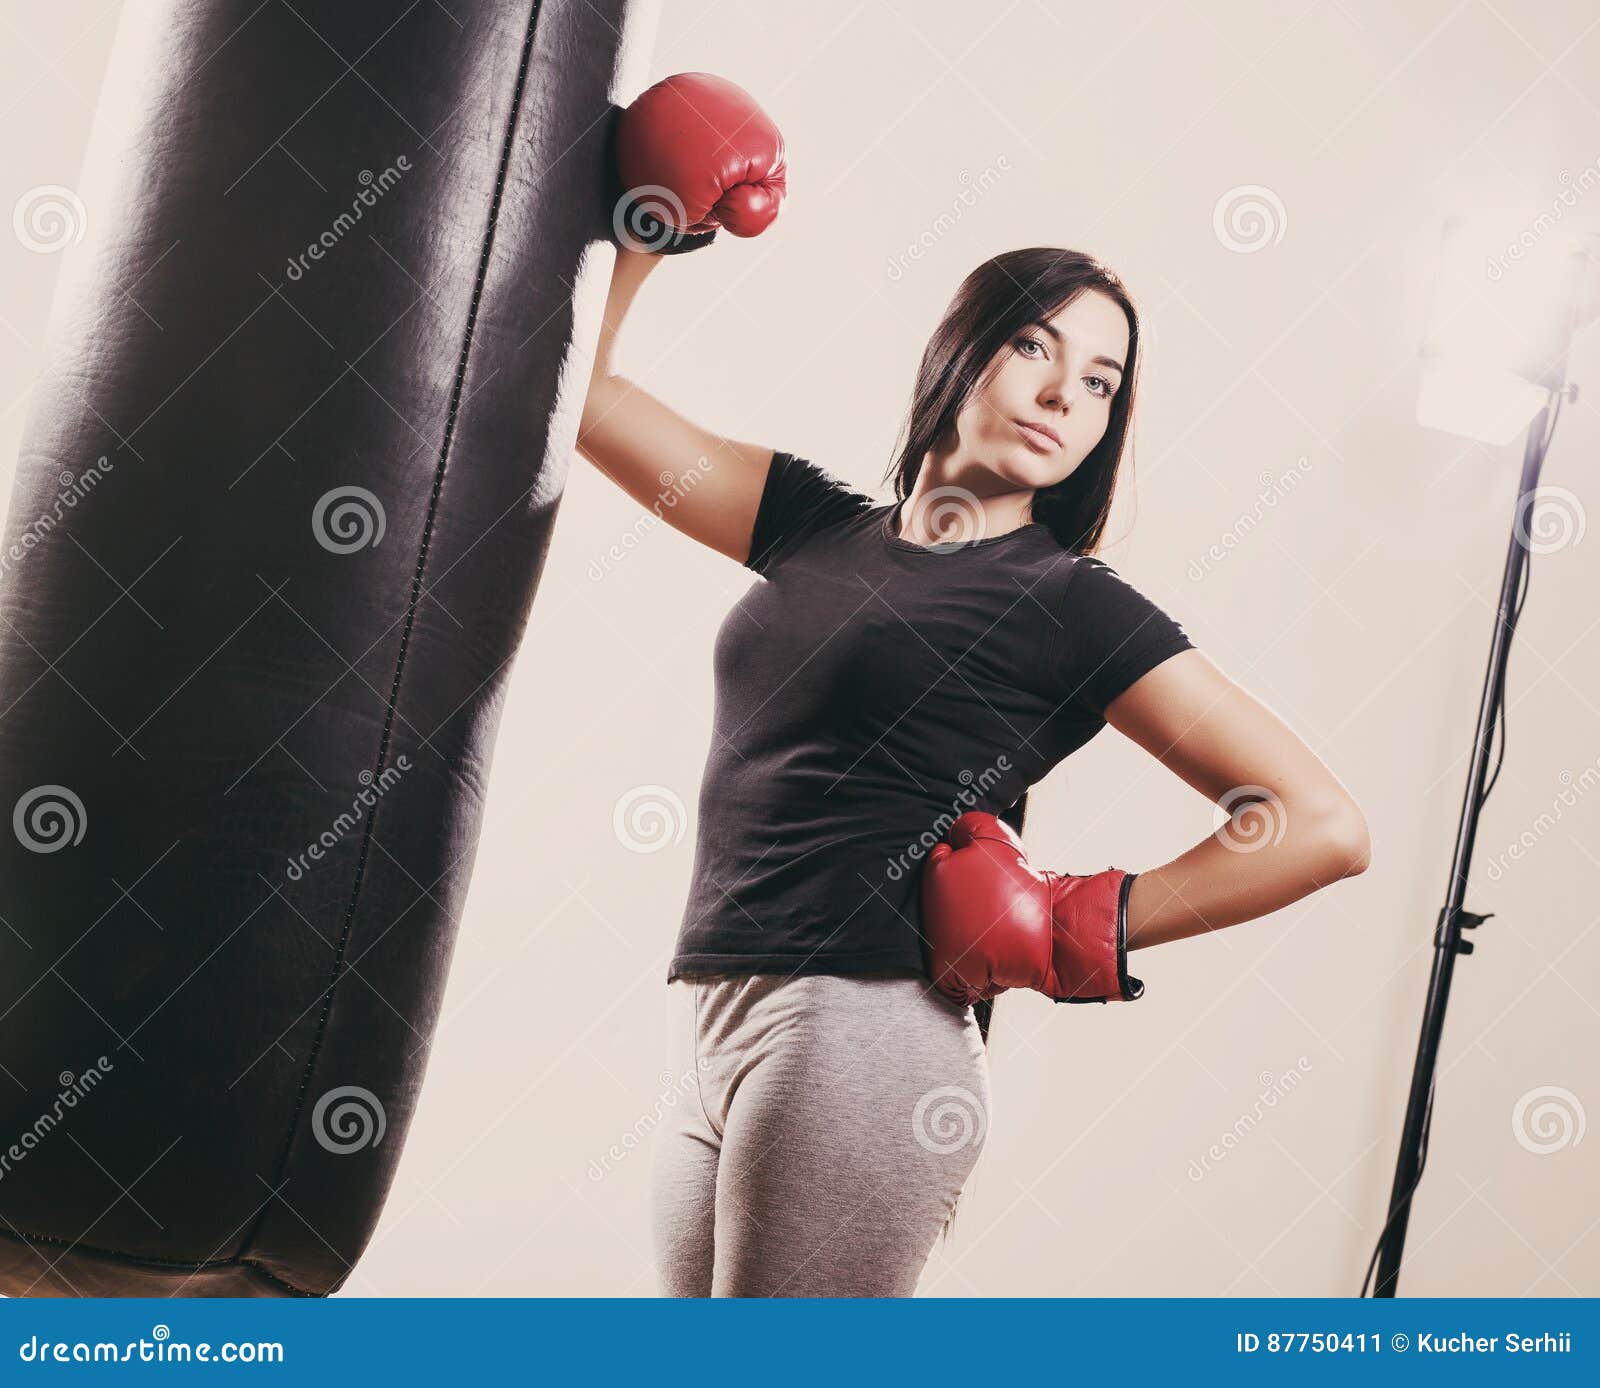 Portrait Brunette Boxing Girl In Gloves And Punching Bag Stock Image Image Of Body Dumbbell